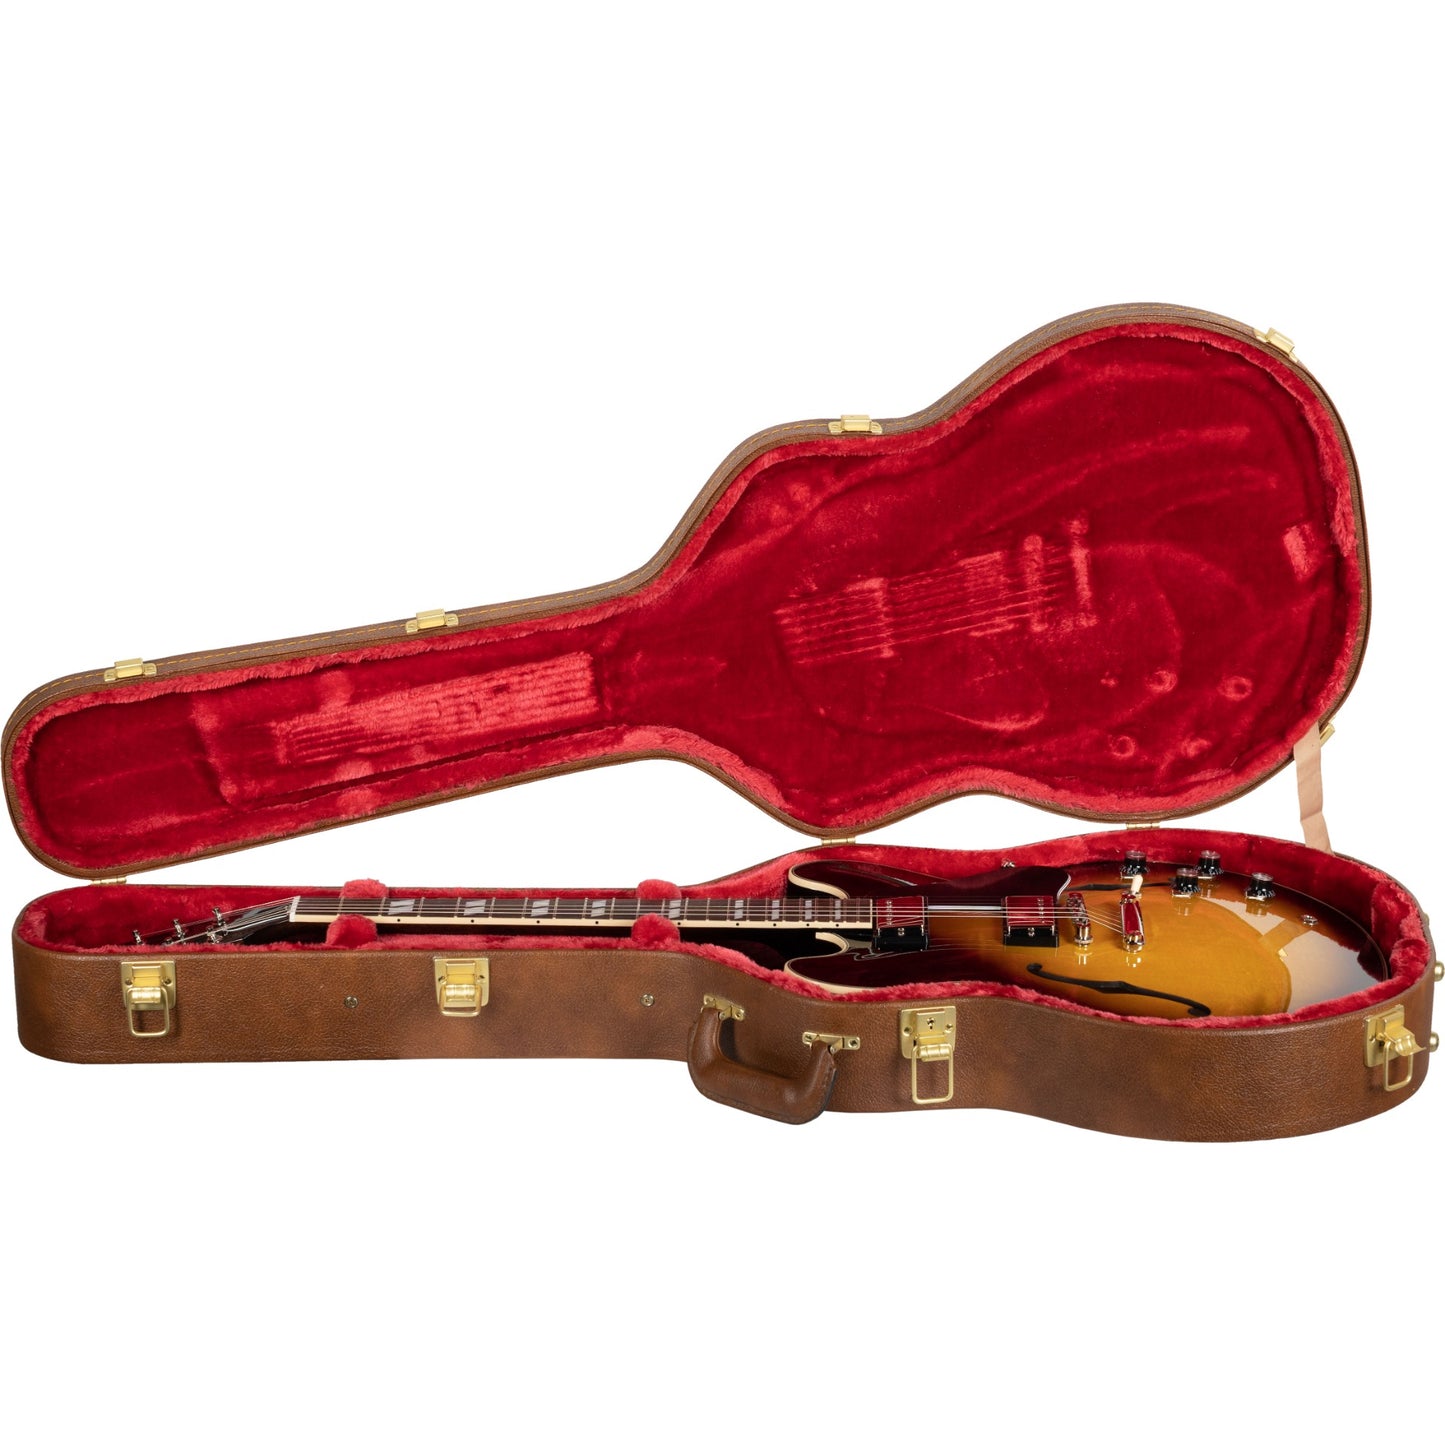 Gibson ES-345 Semi Hollow Electric Guitar - Vintage Burst